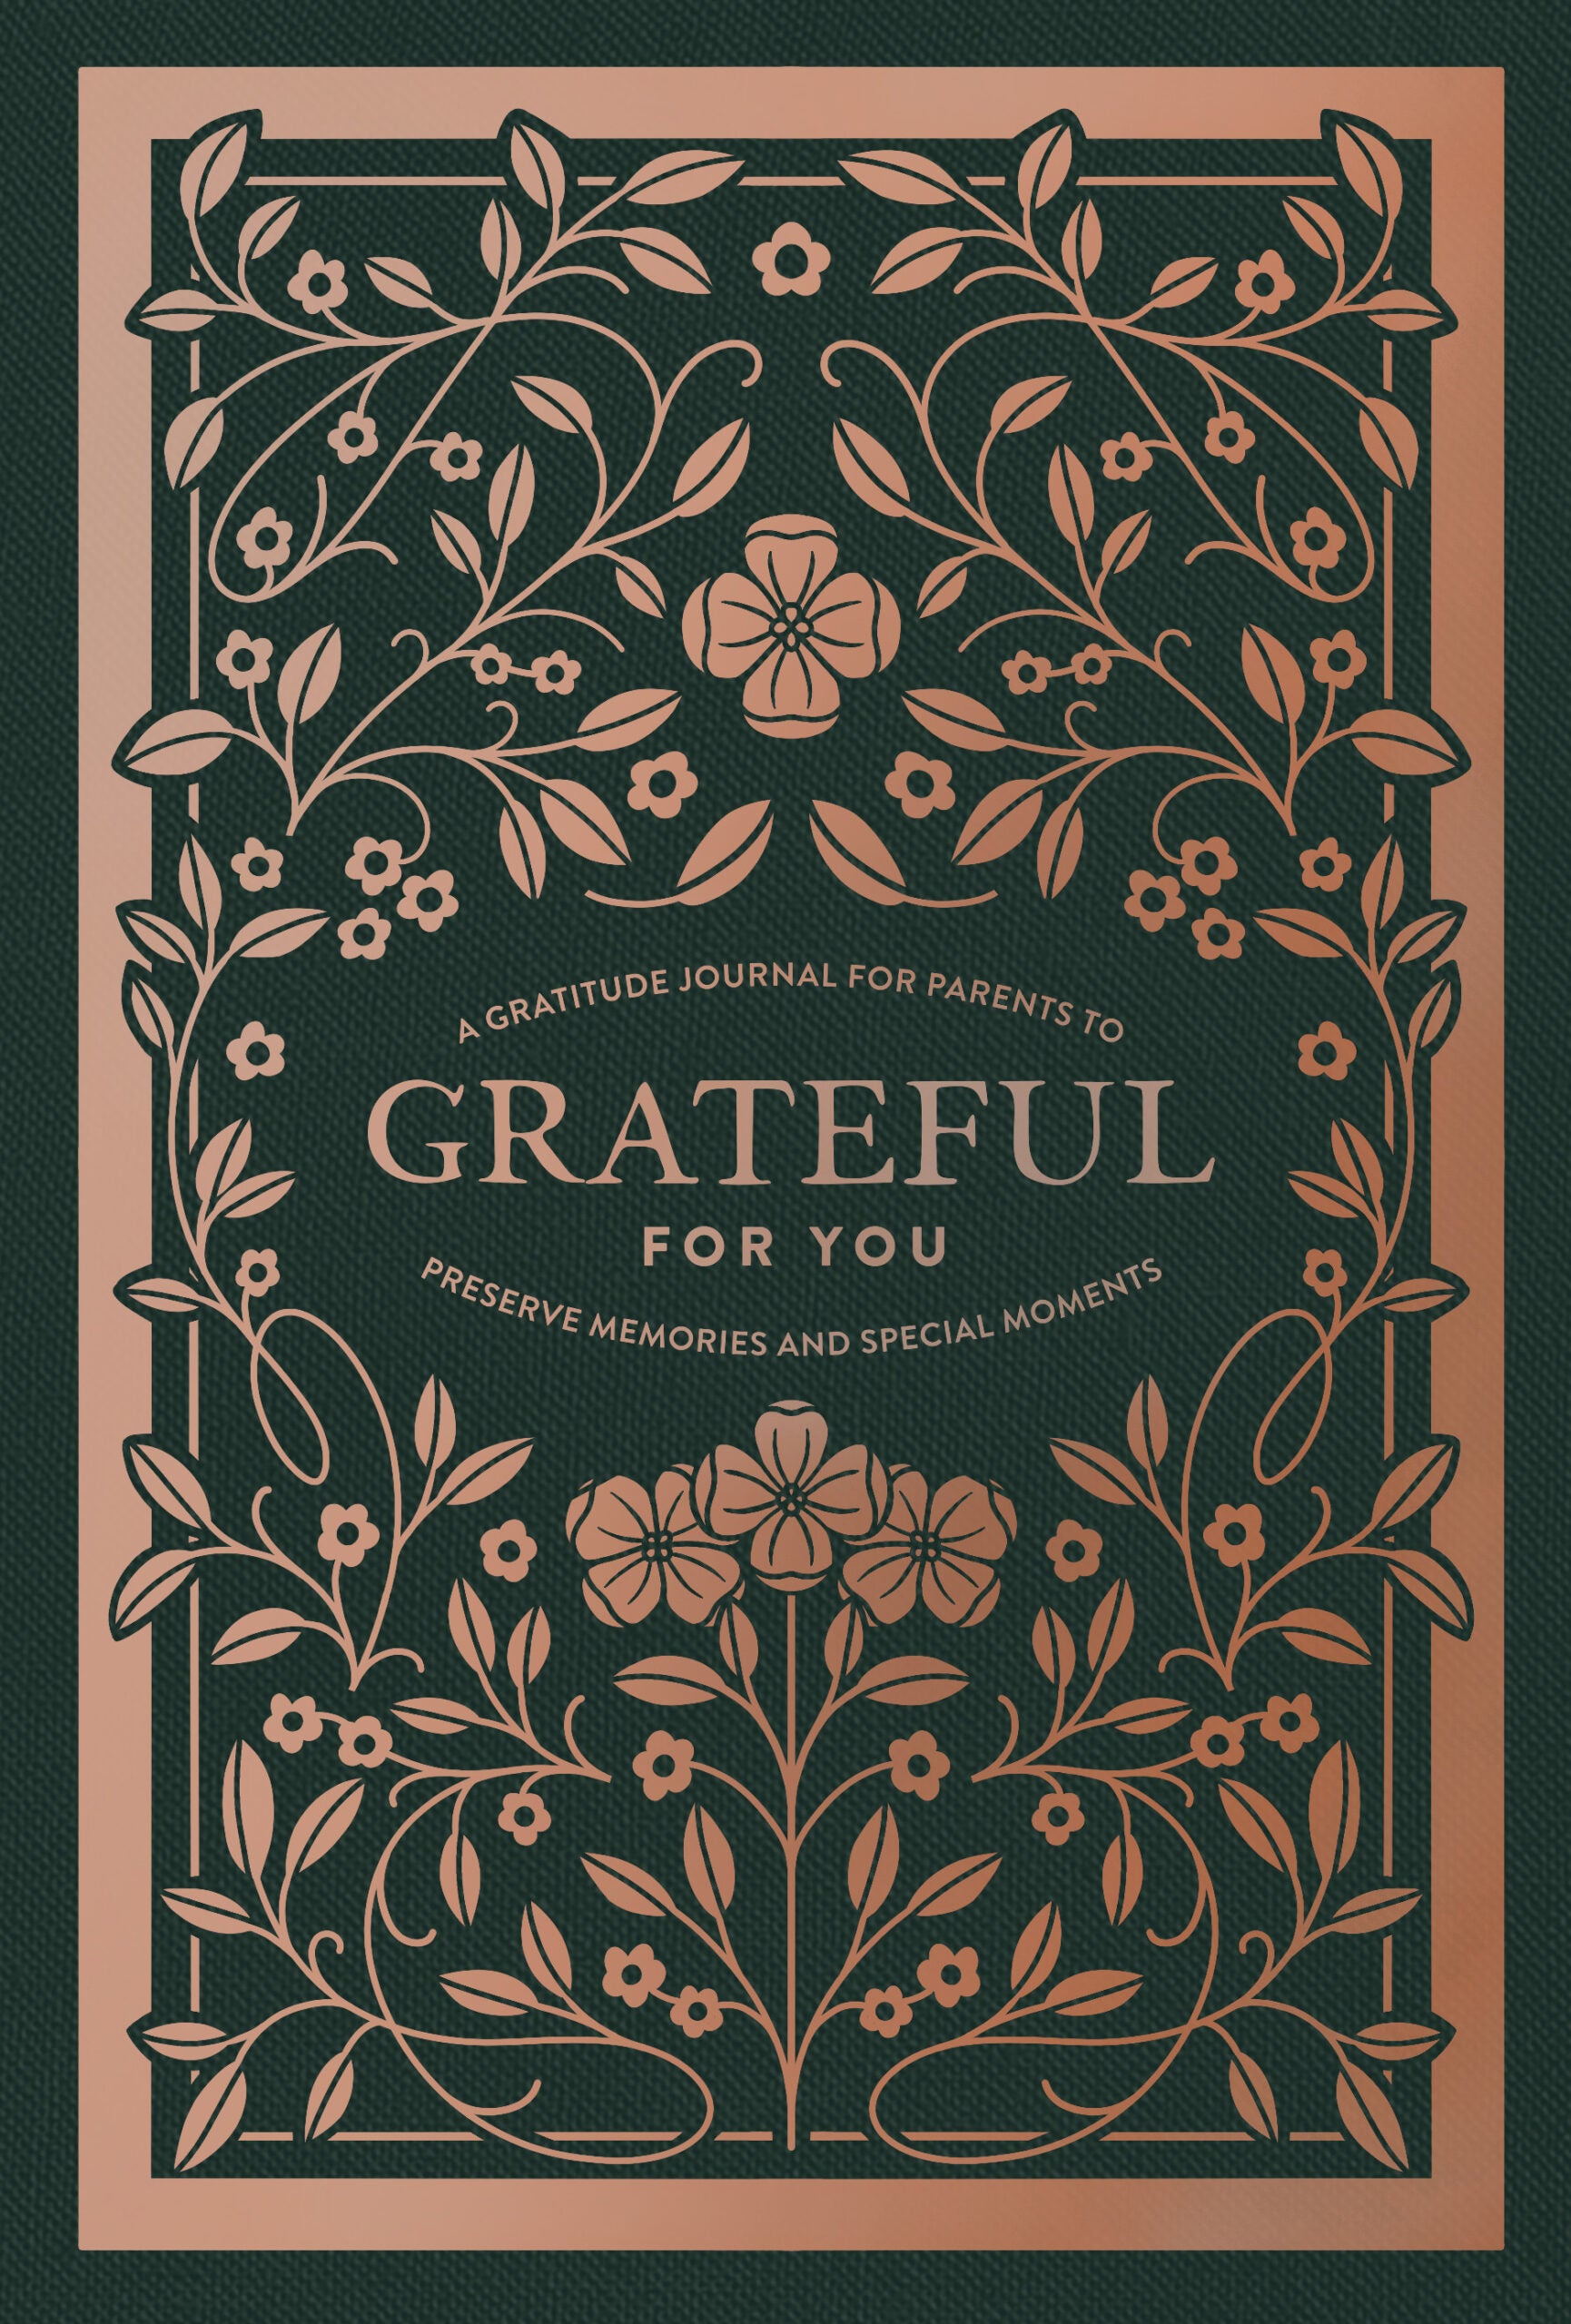 Gratitude: Books for Reflecting